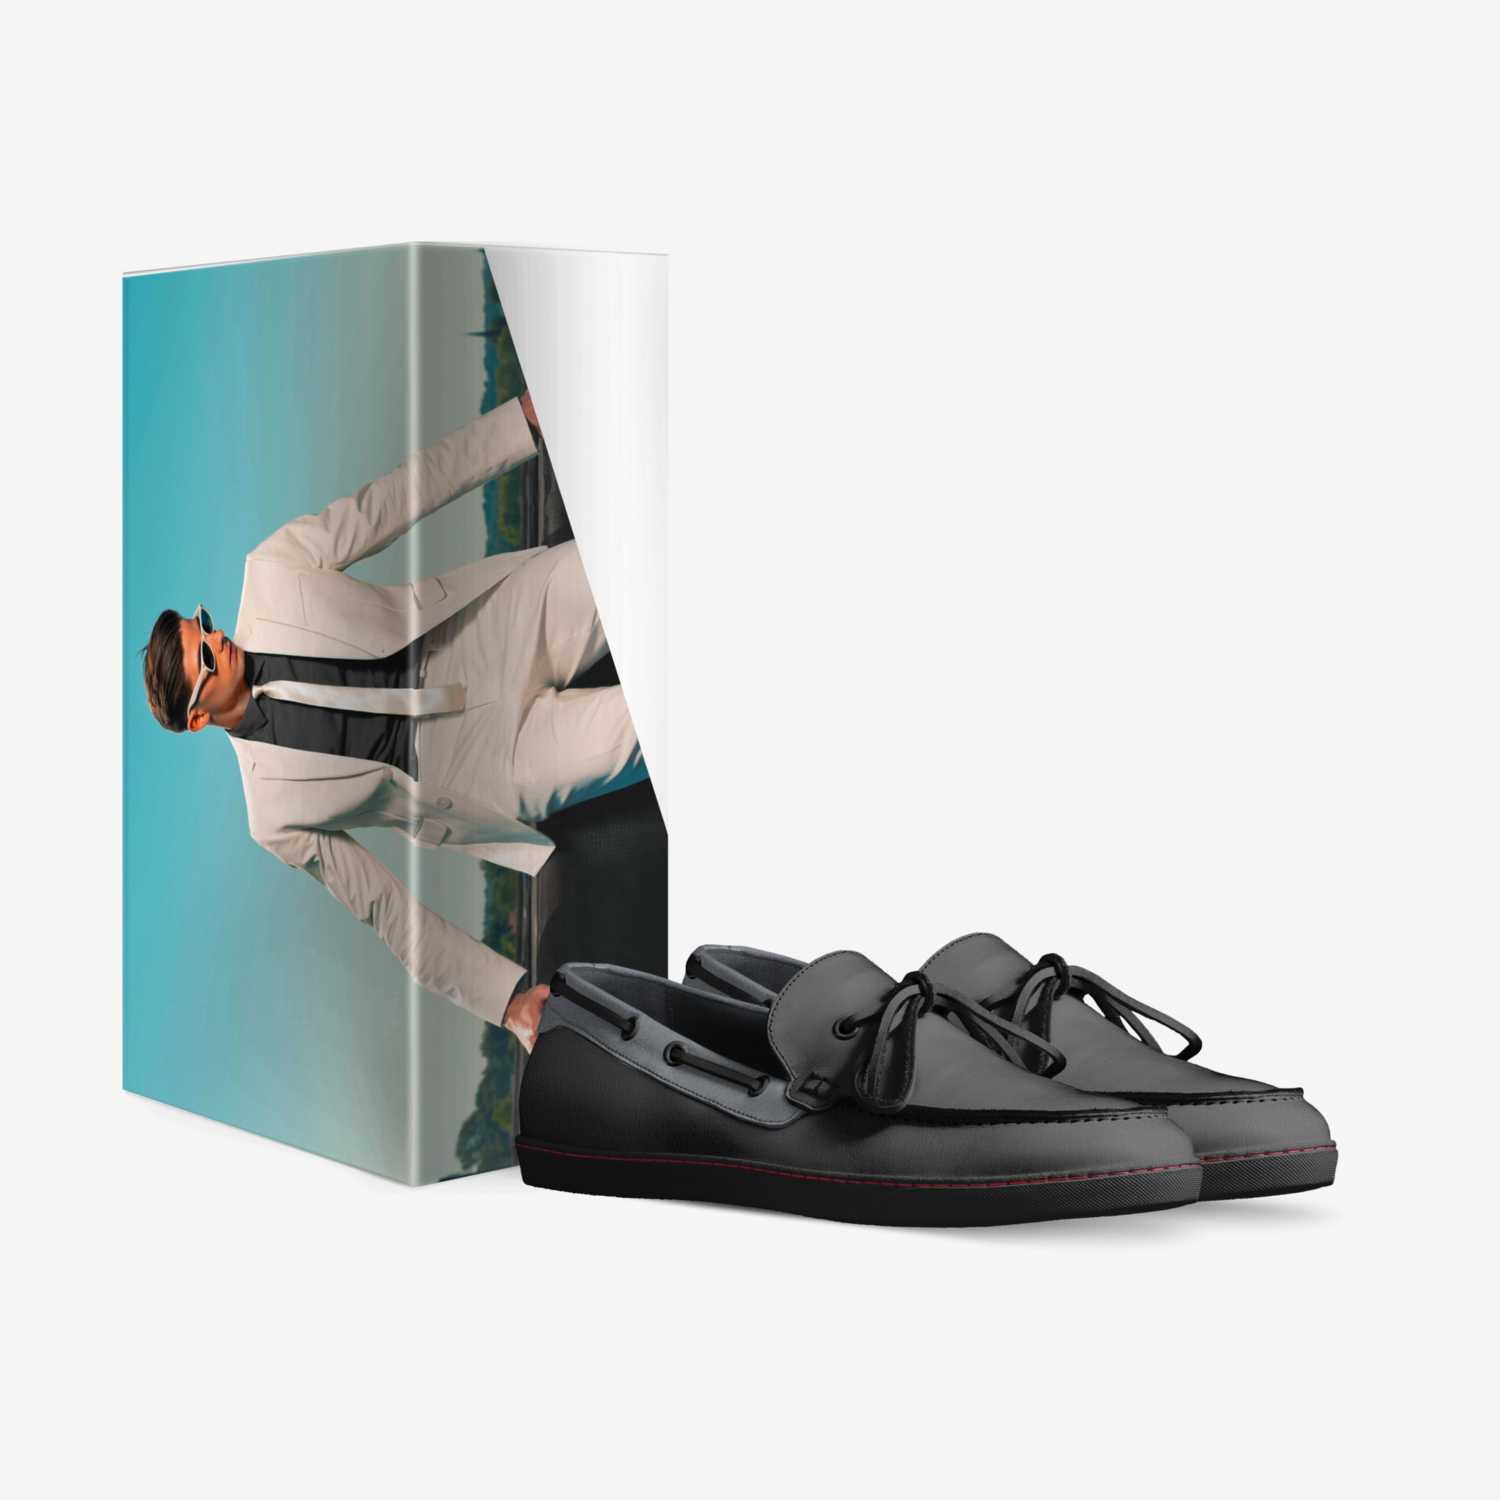 High Society custom made in Italy shoes by Kalandrae Mallory | Box view